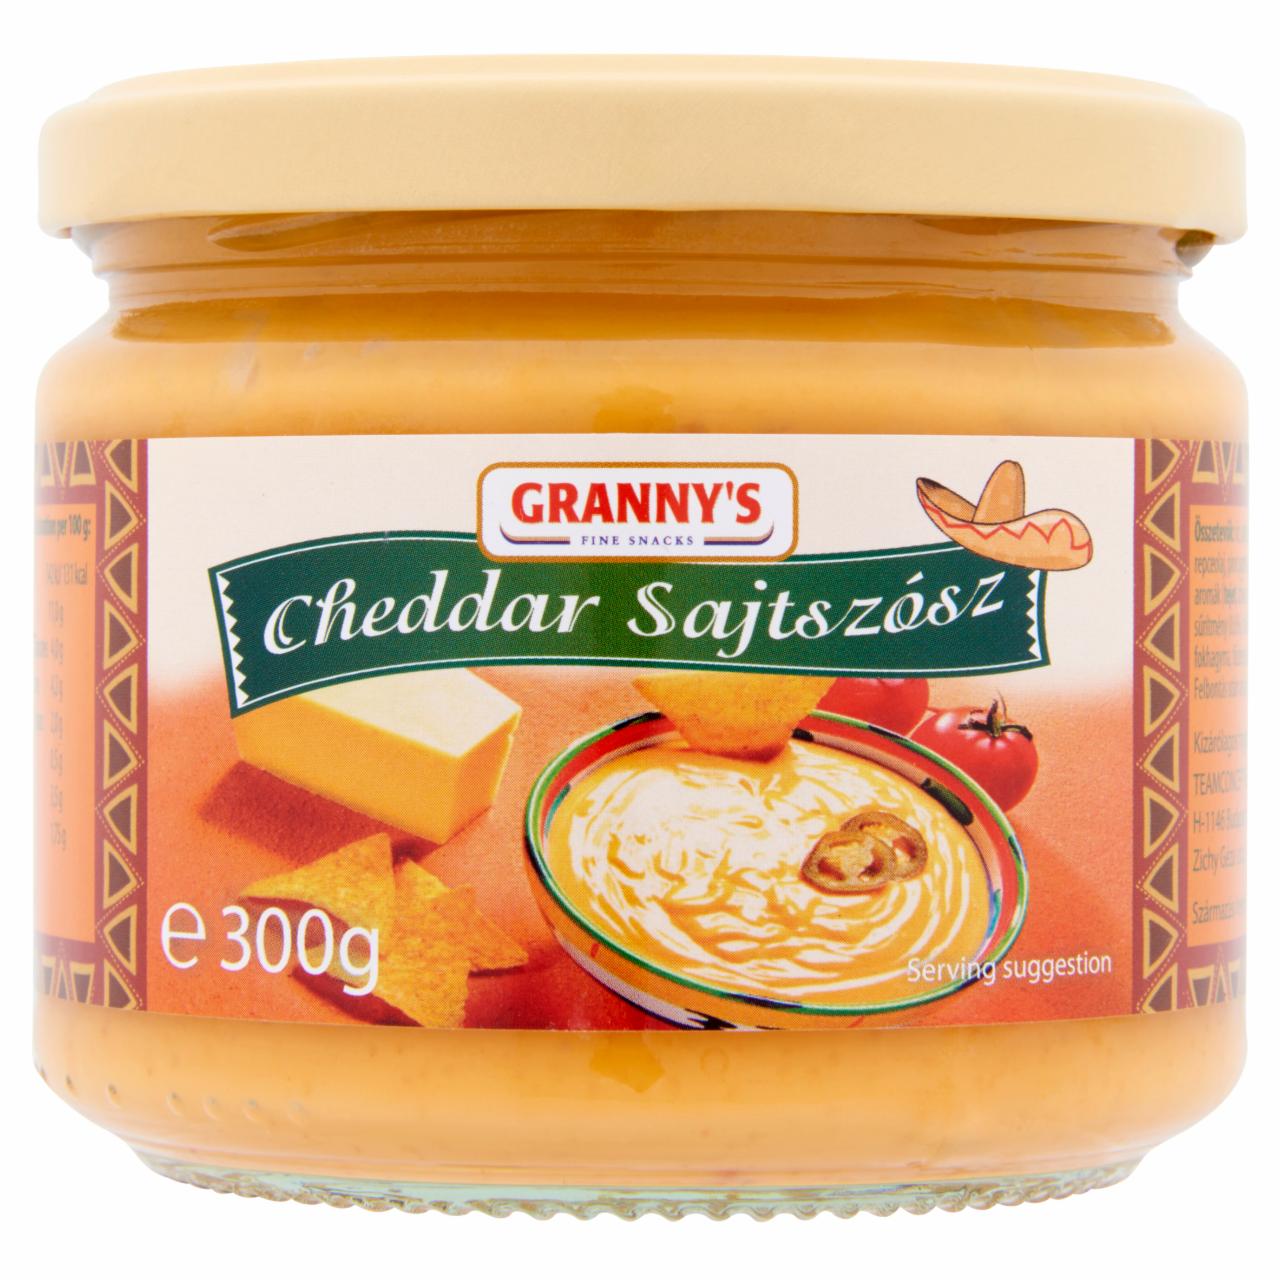 Képek - Granny's cheddar sajtszósz 300 g